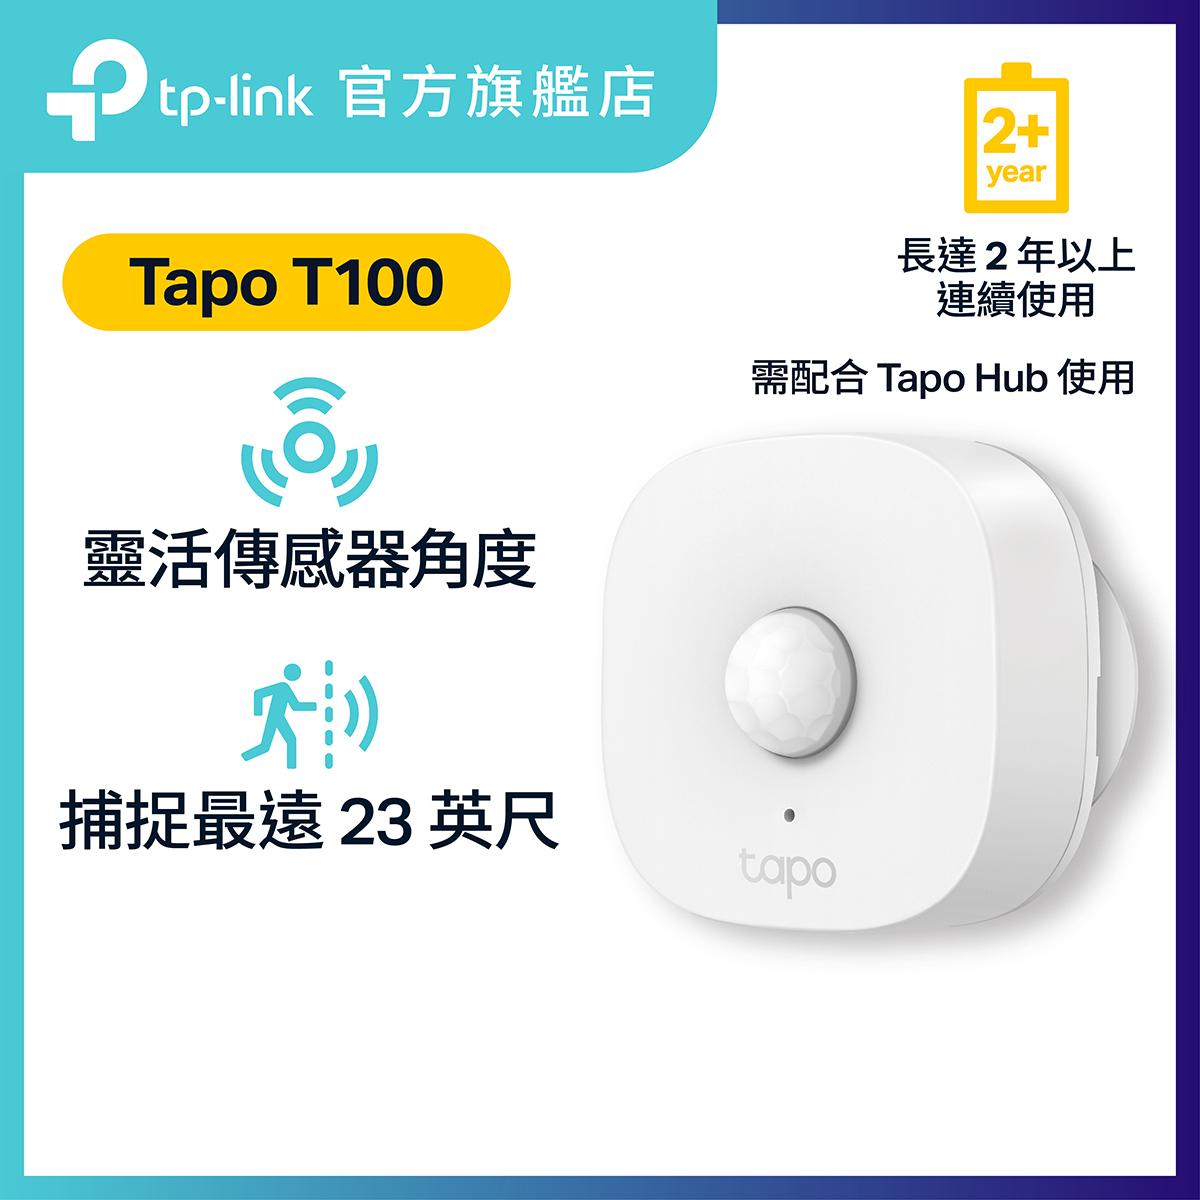 Tapo T100 智能動態感應器-需配合Tapo H100或Tapo H200 共同工作